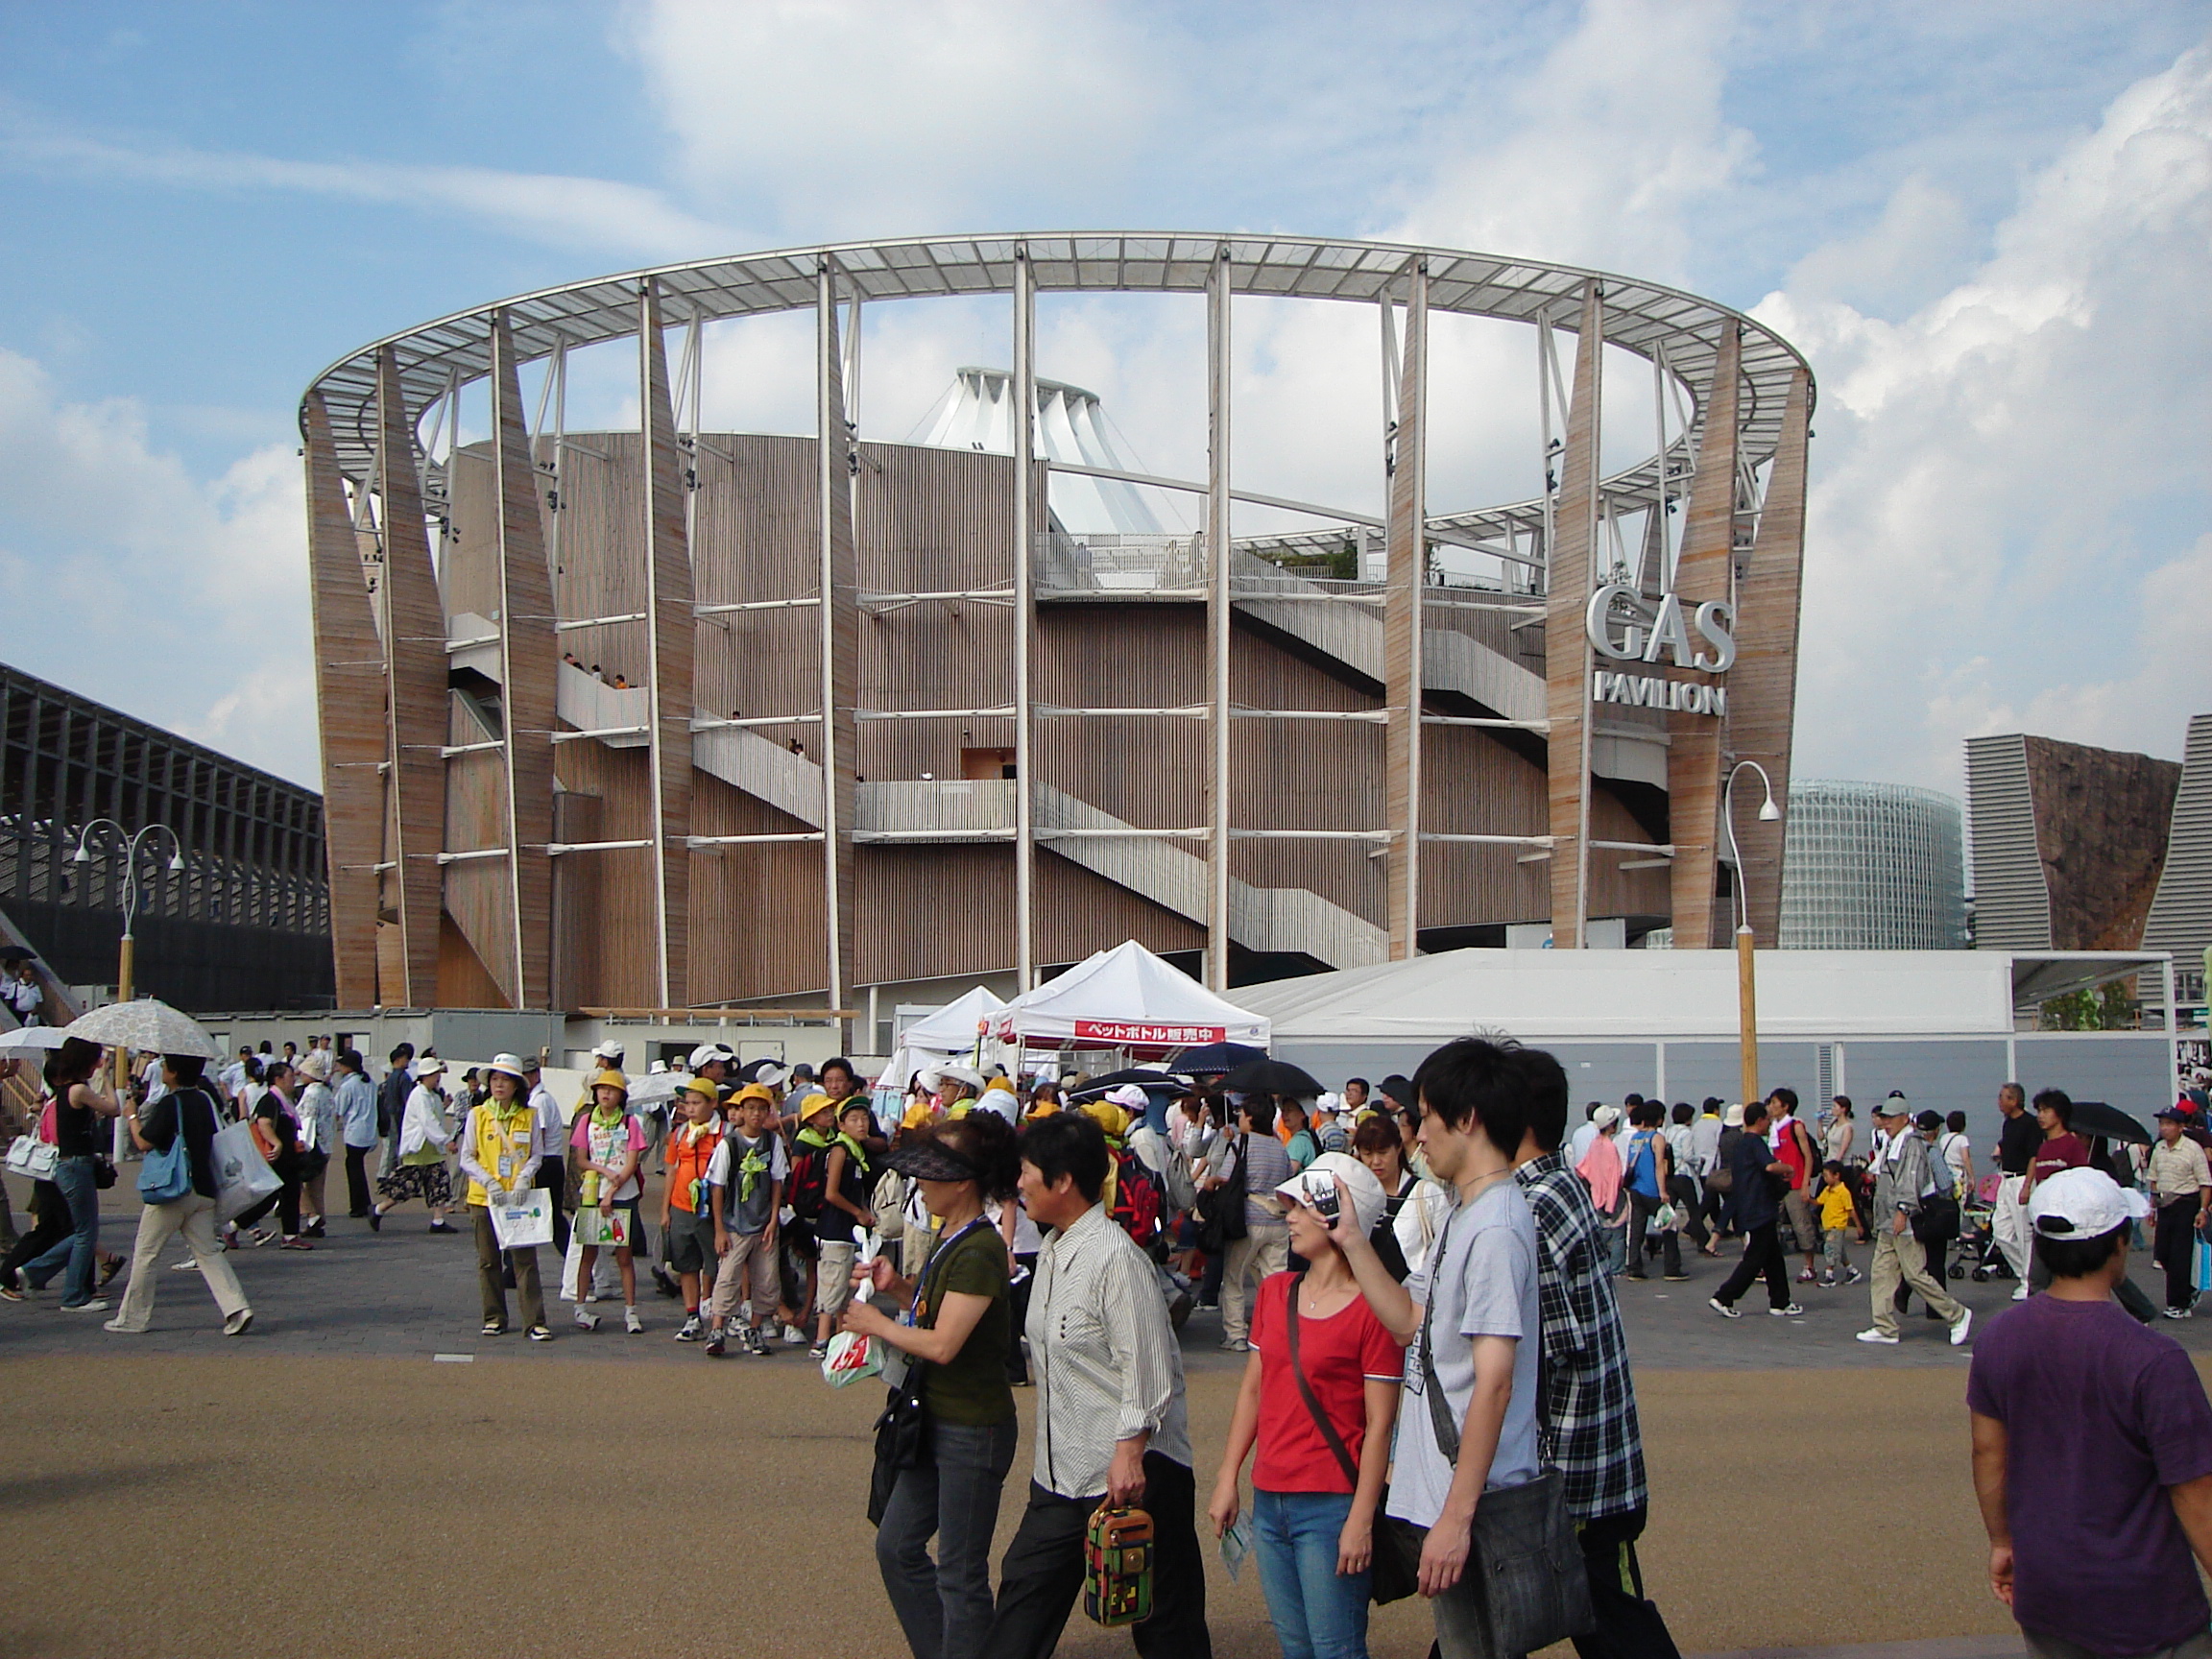 crowds wander near a round wooden building